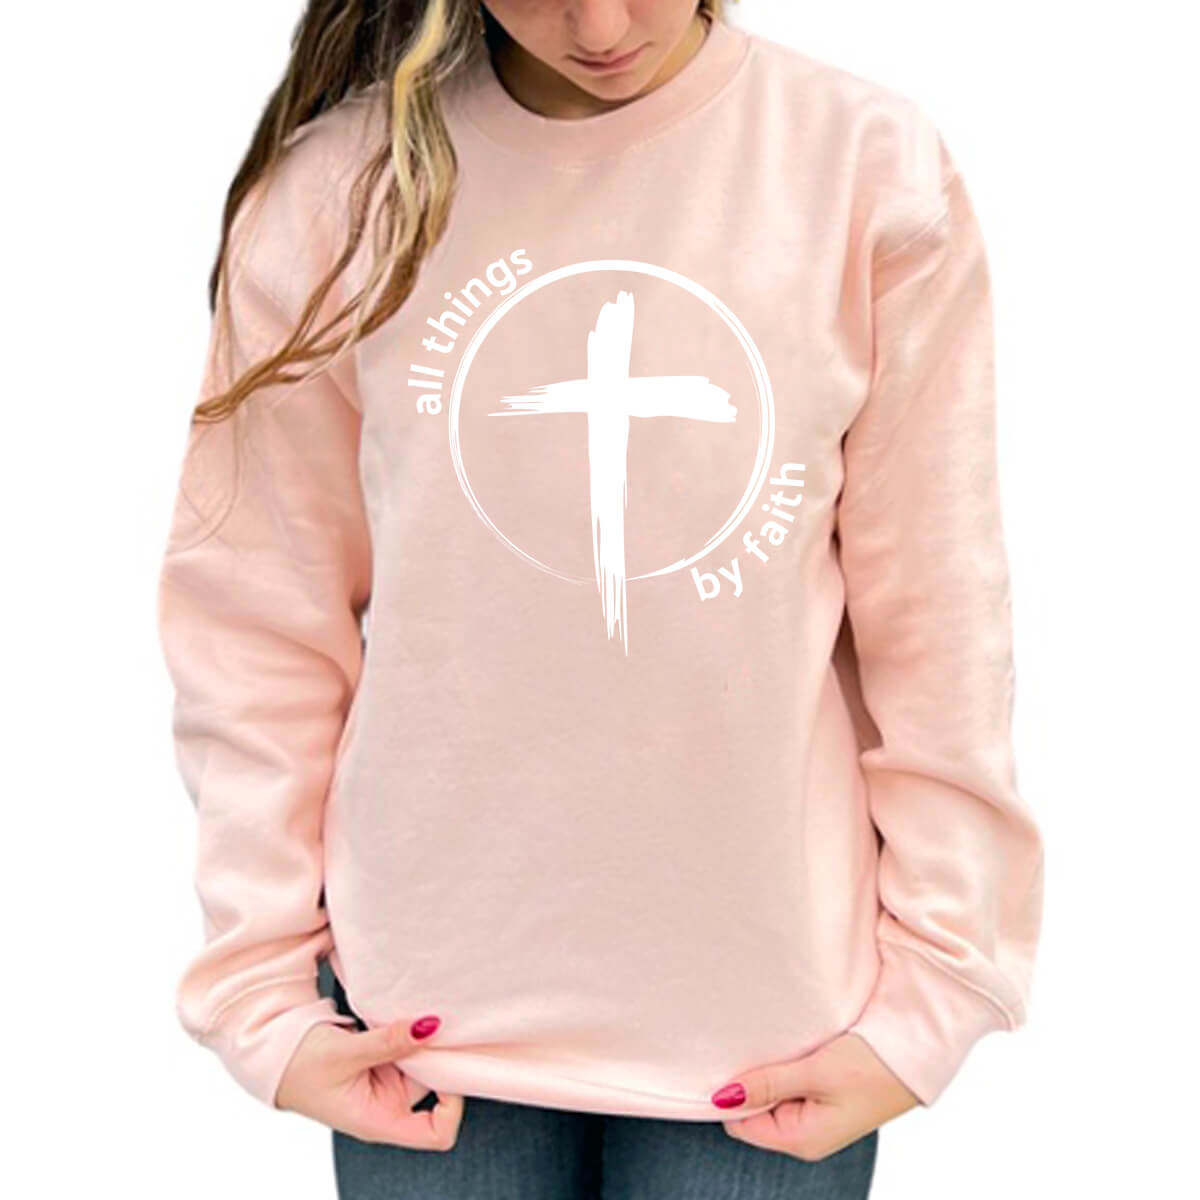 All Things By Faith Cross Crewneck Sweatshirt